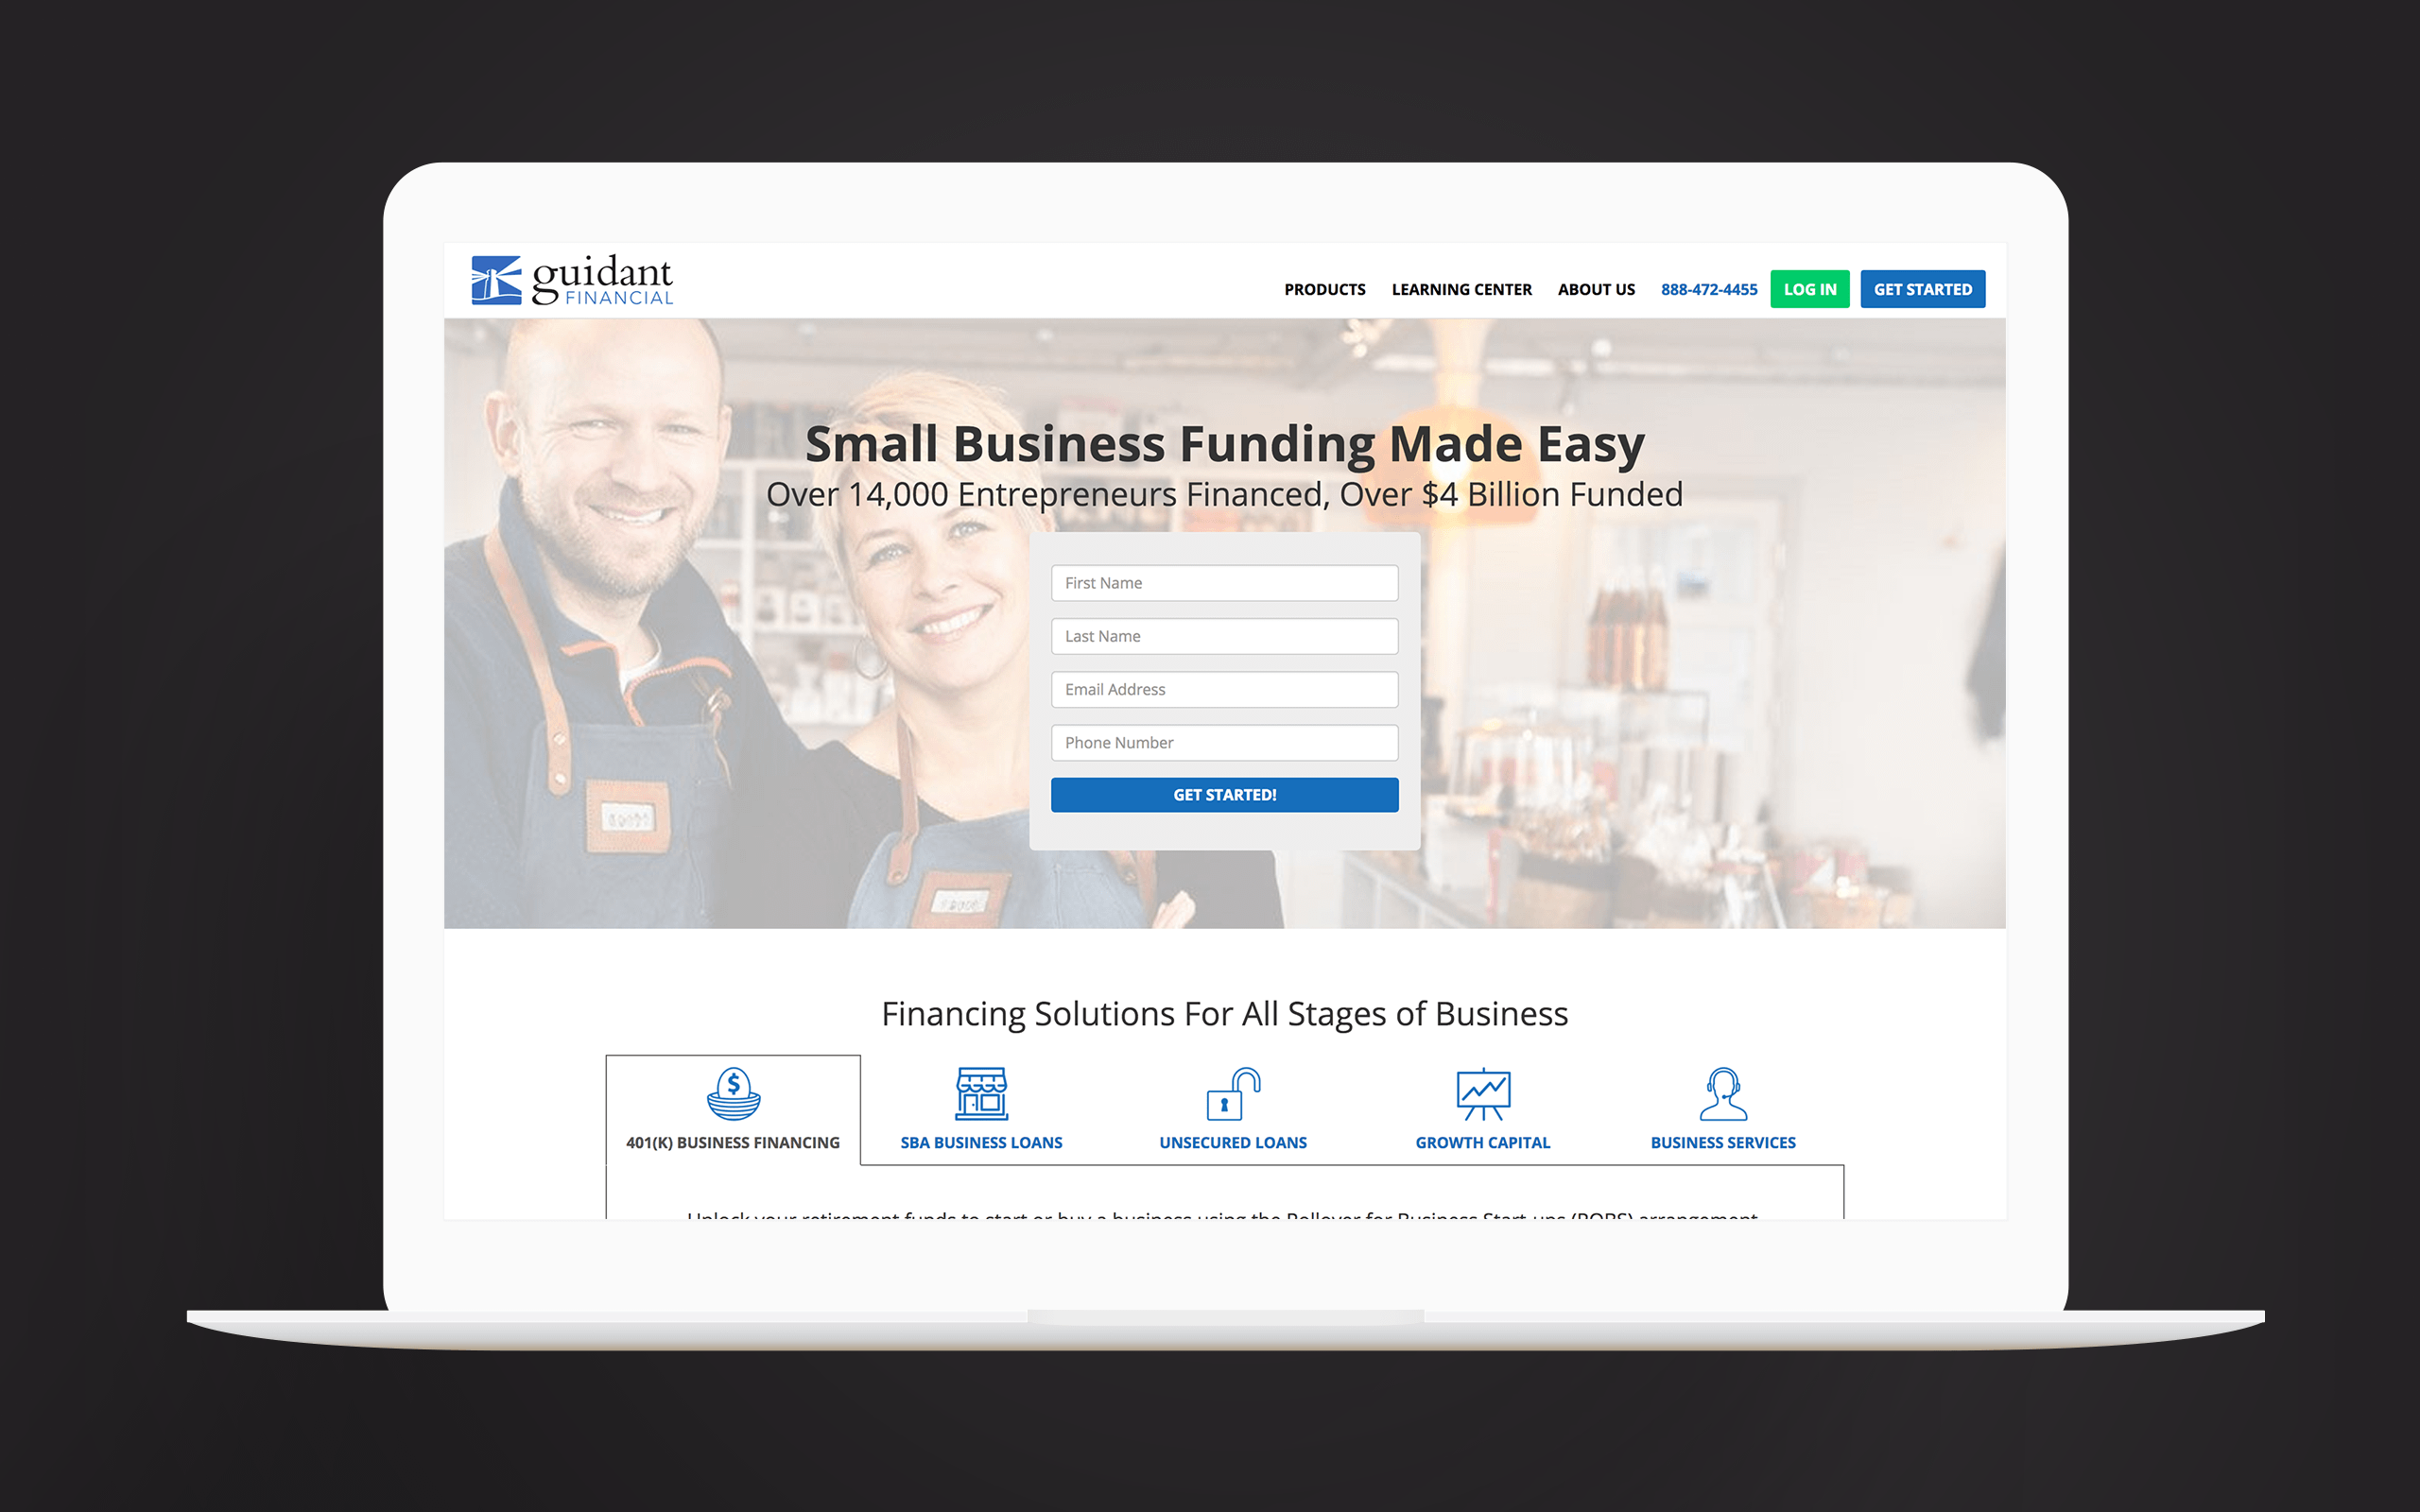 guidant-financial-desktop-laptop-homepage